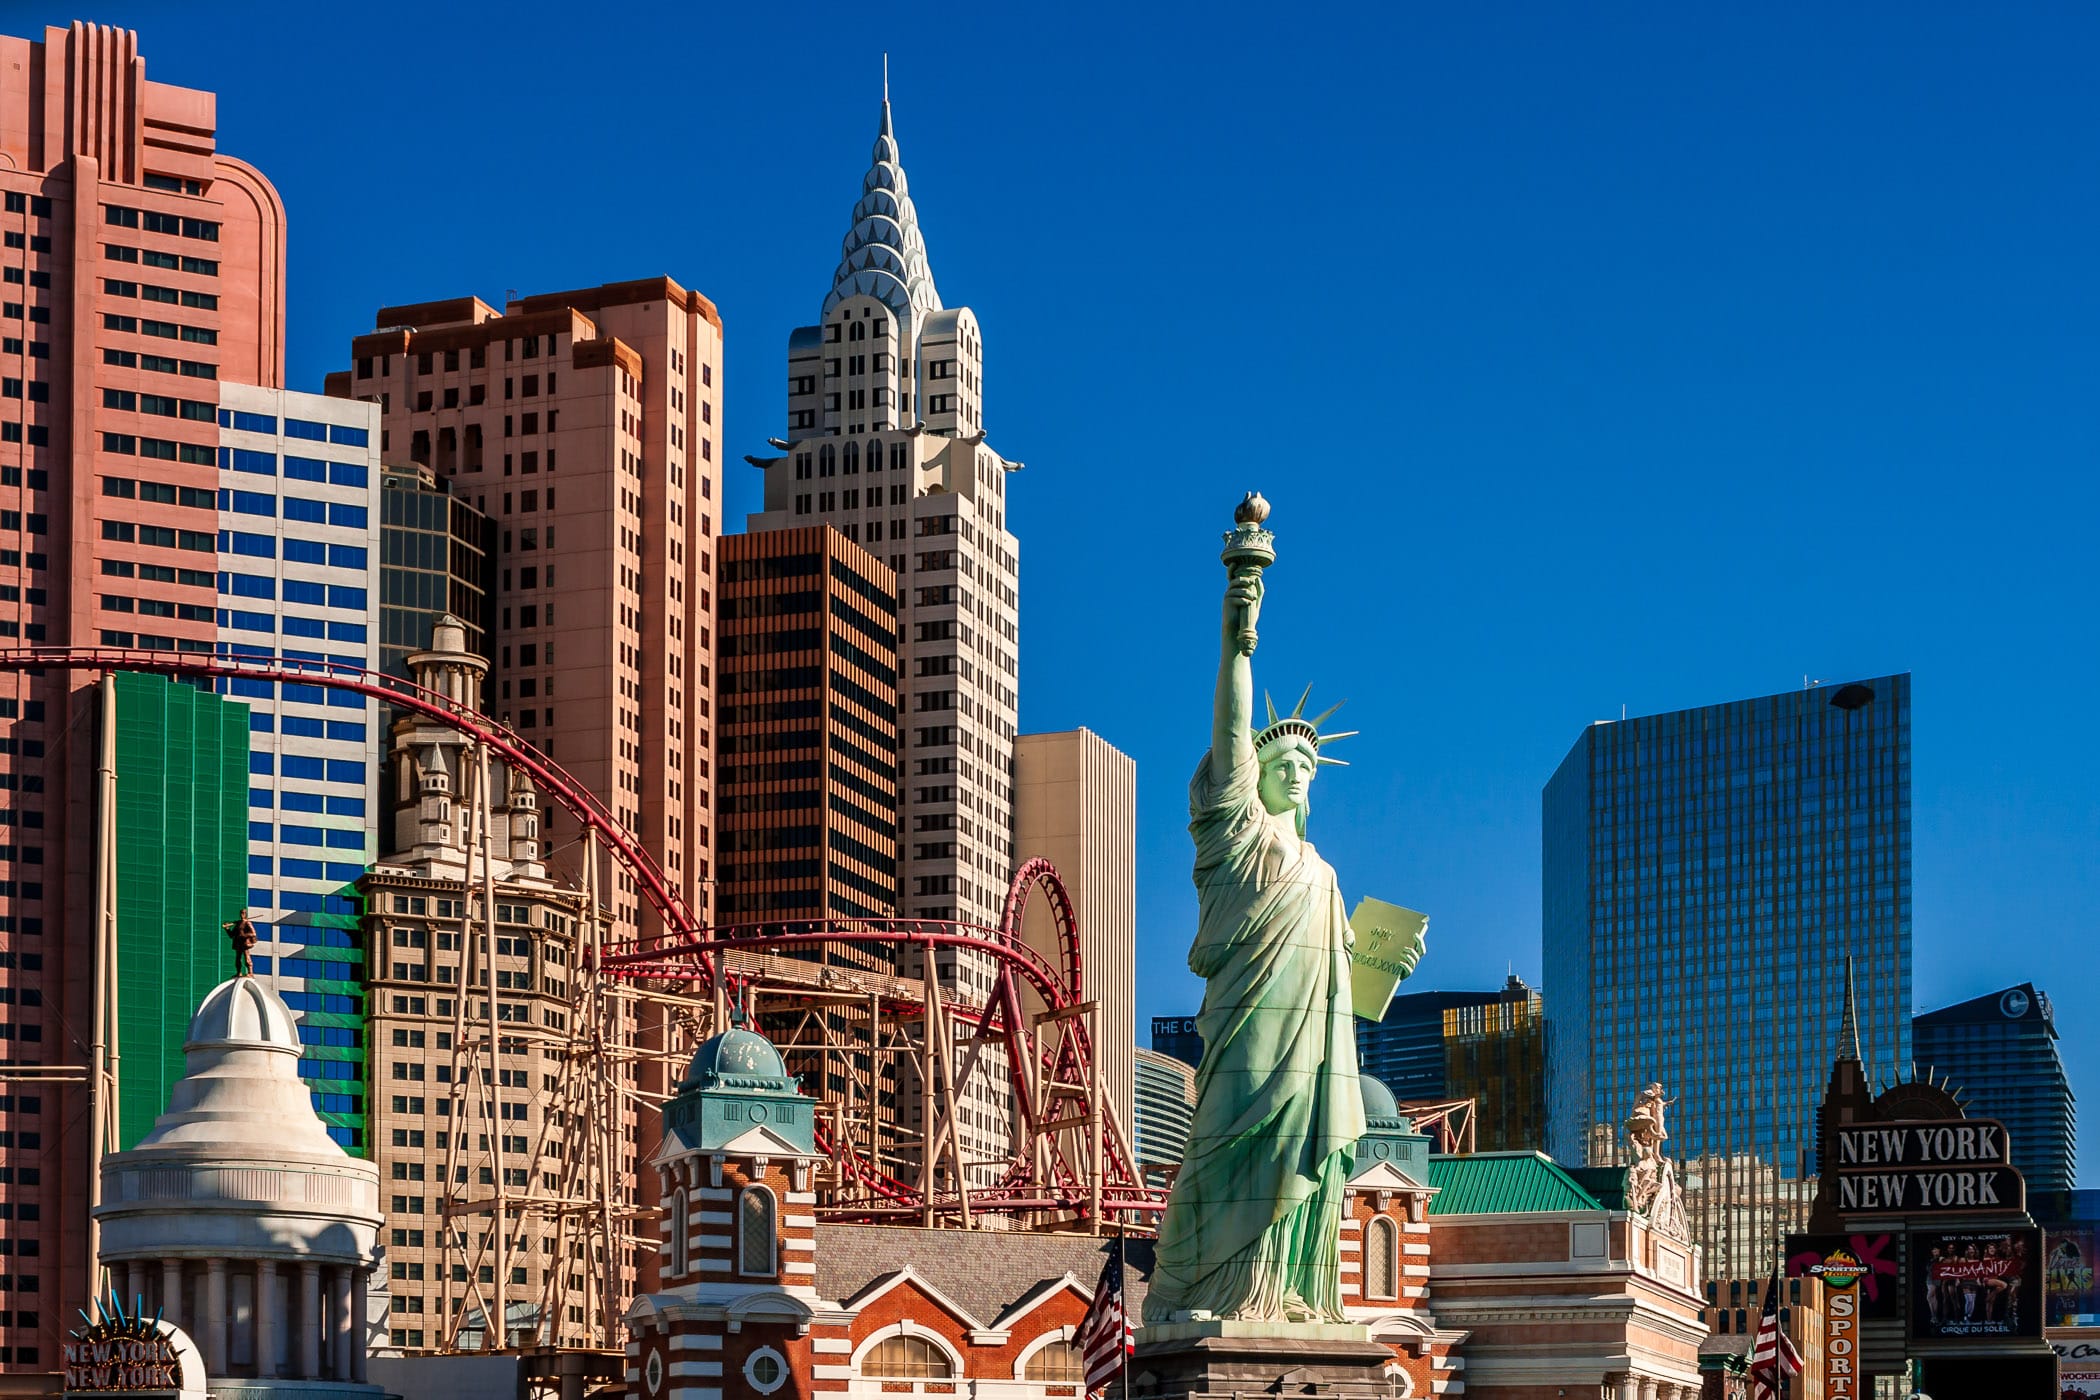 New York New York Hotel & Casino's replica of the Statue of Liberty rises into the Nevada desert sky in Las Vegas.